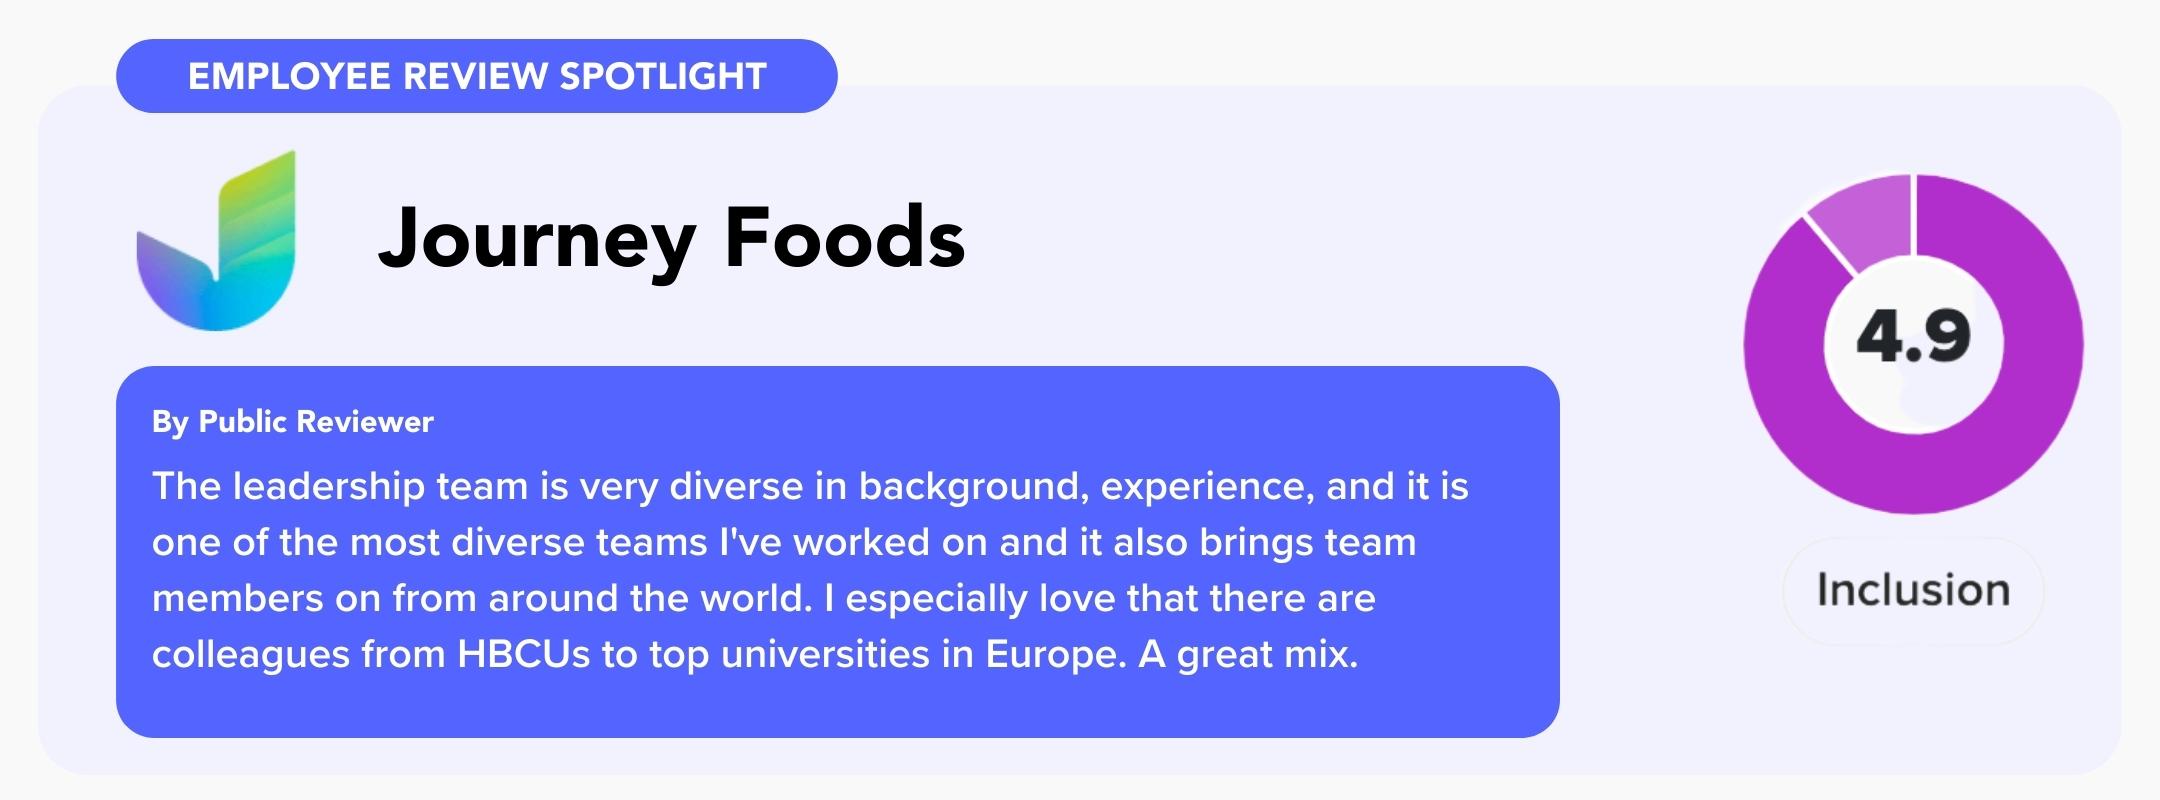 Journey Foods employee review